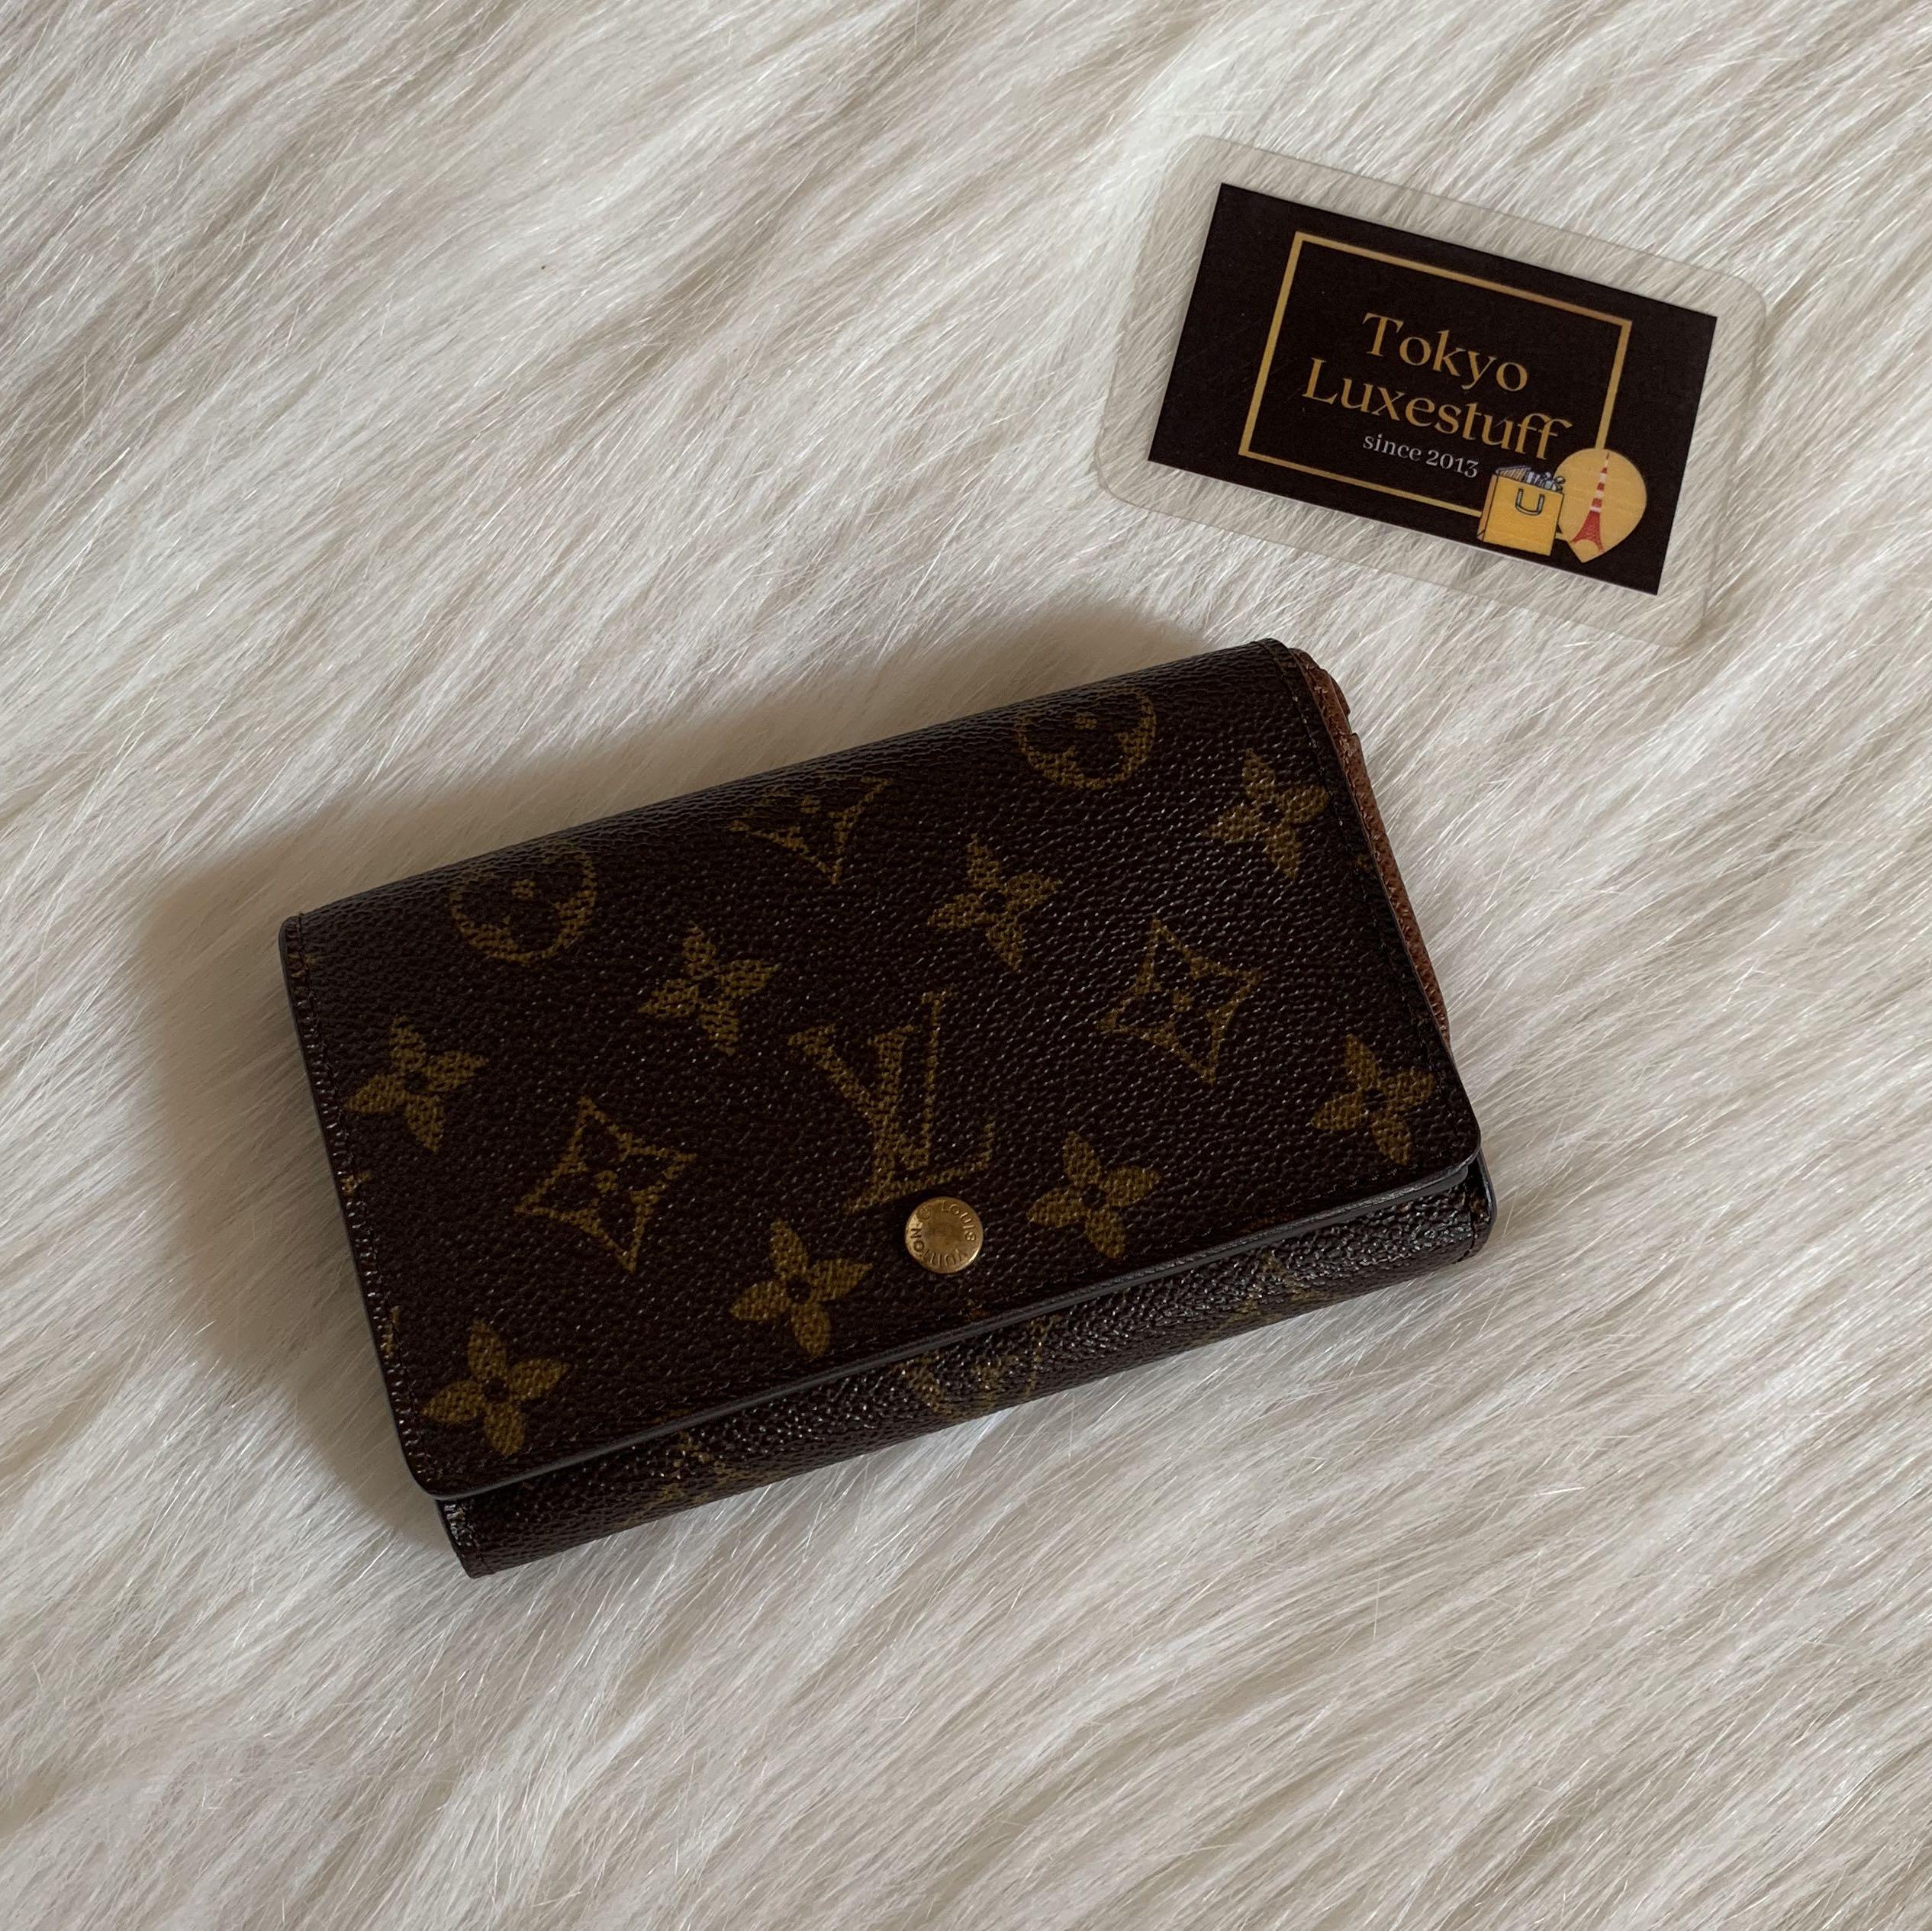 Authentic Preloved Louis Vuitton LV Monogram Compact Wallet Medium